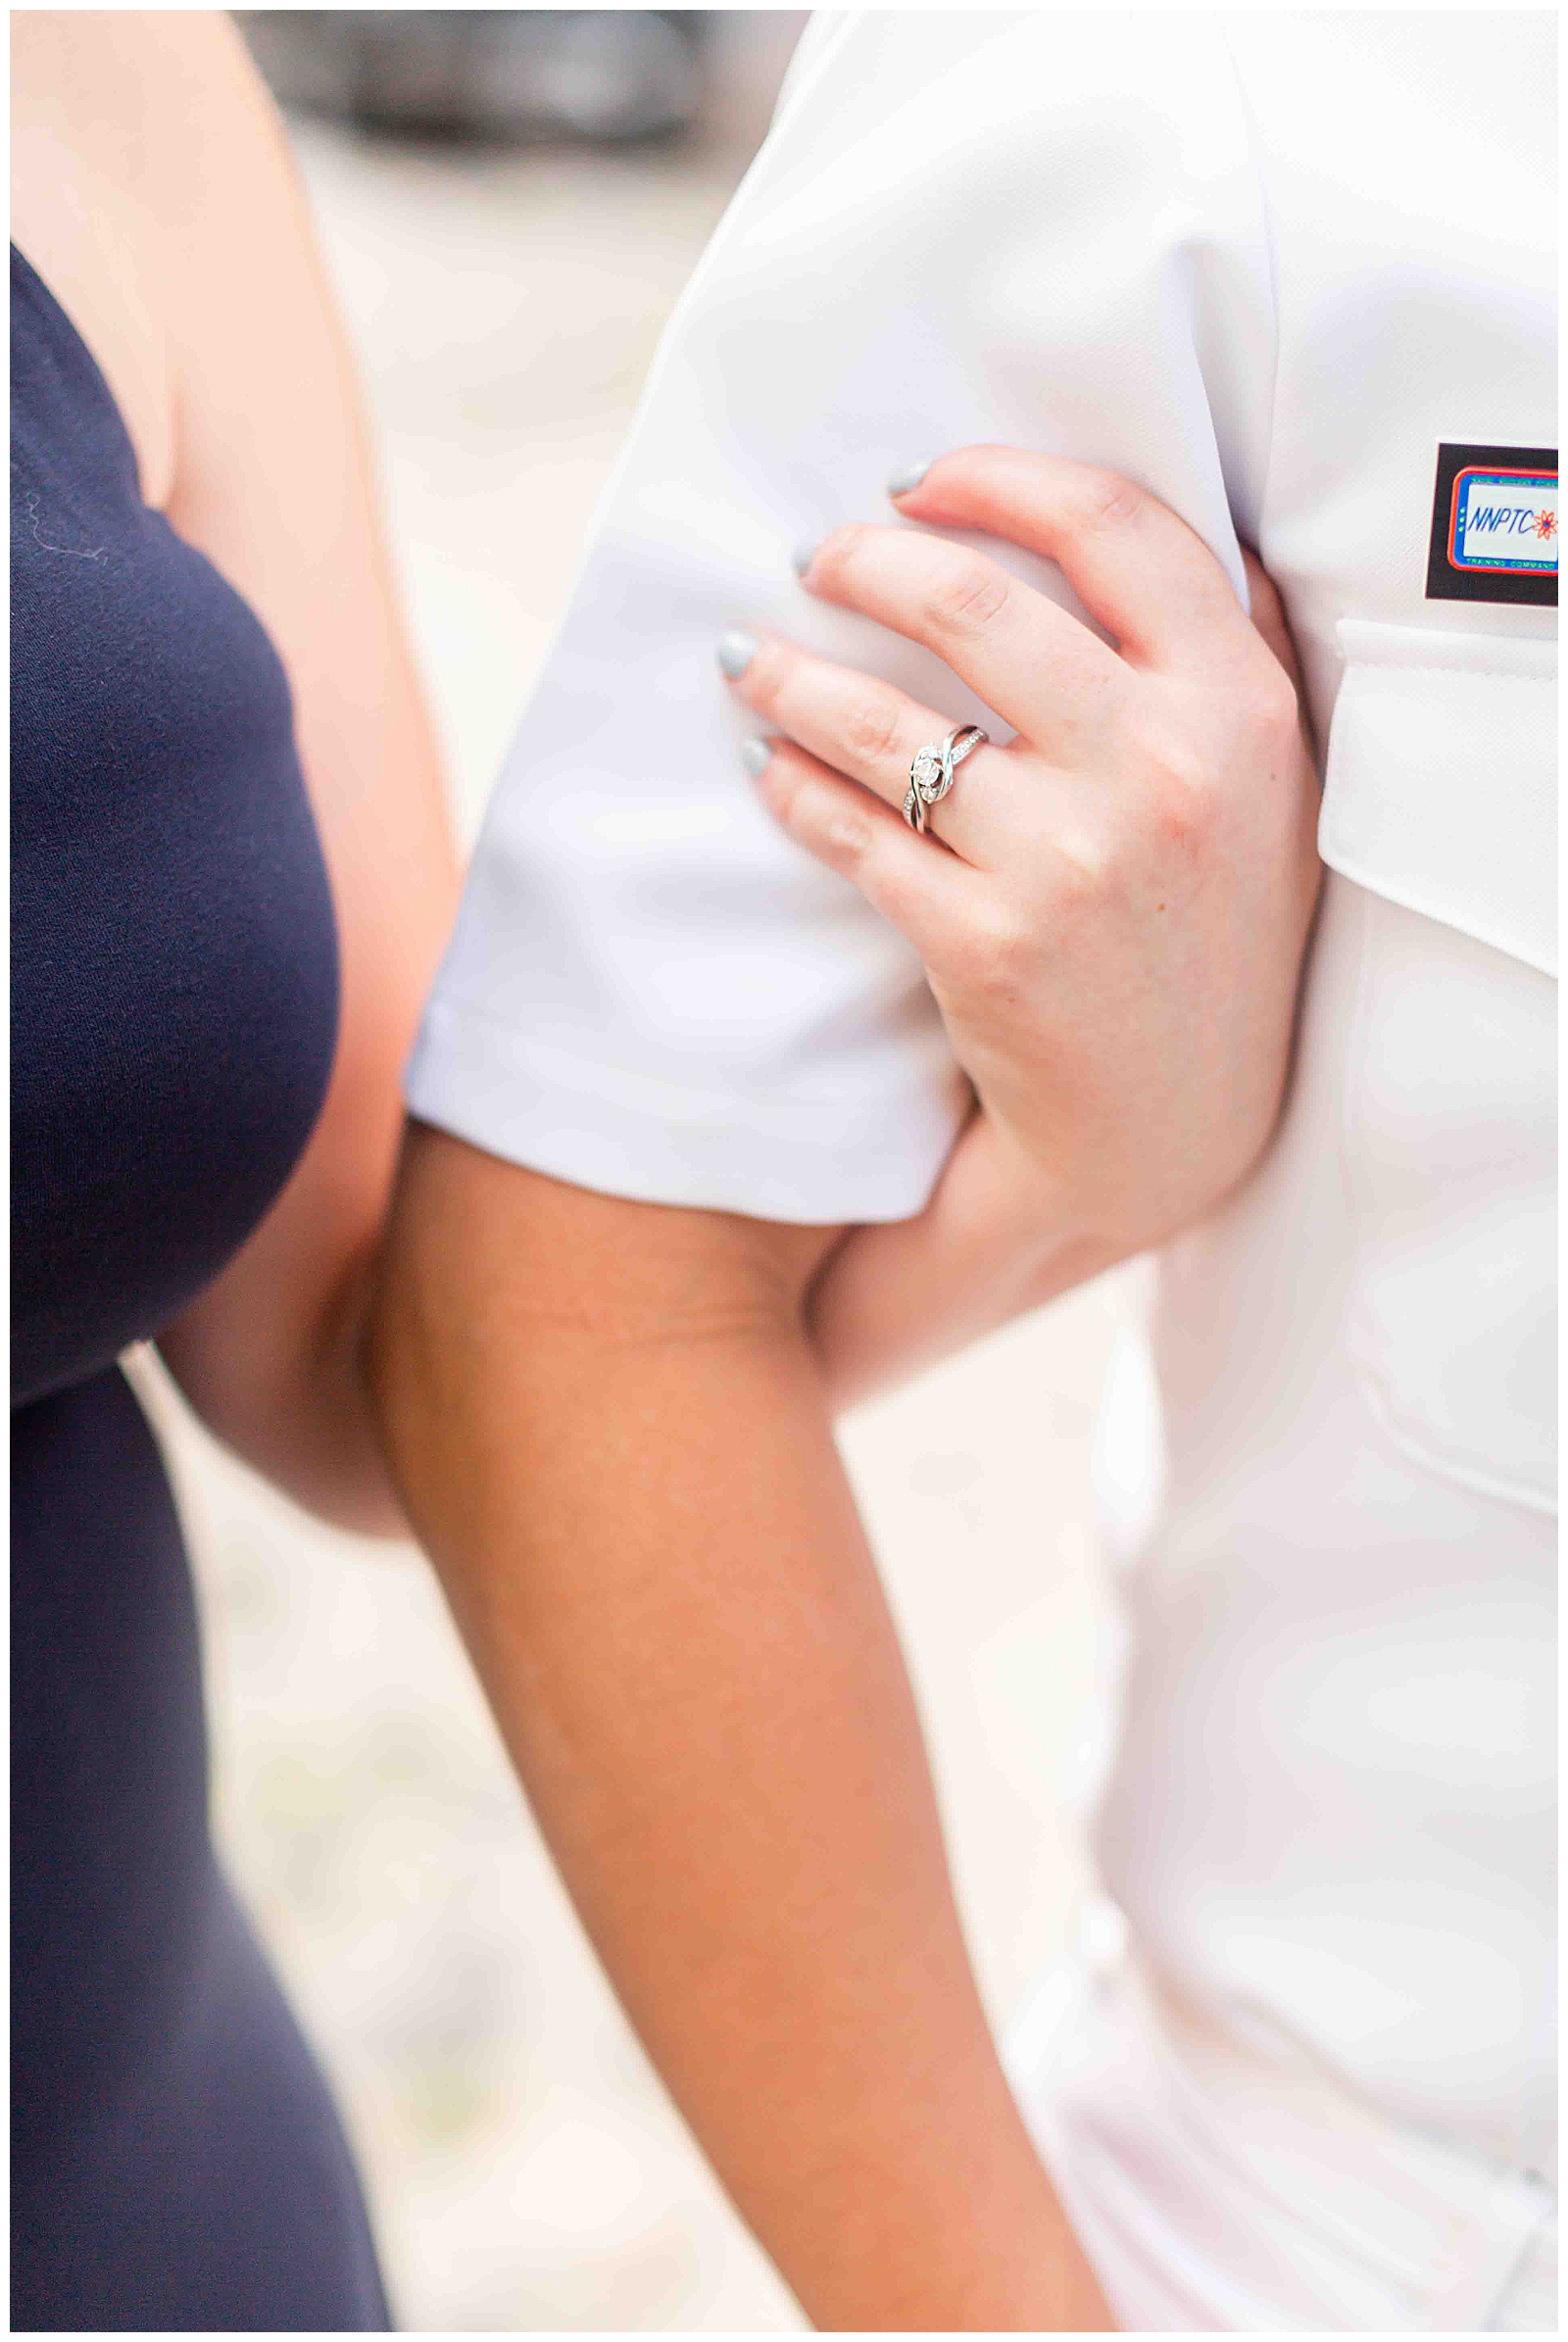 Engagement Ring Details